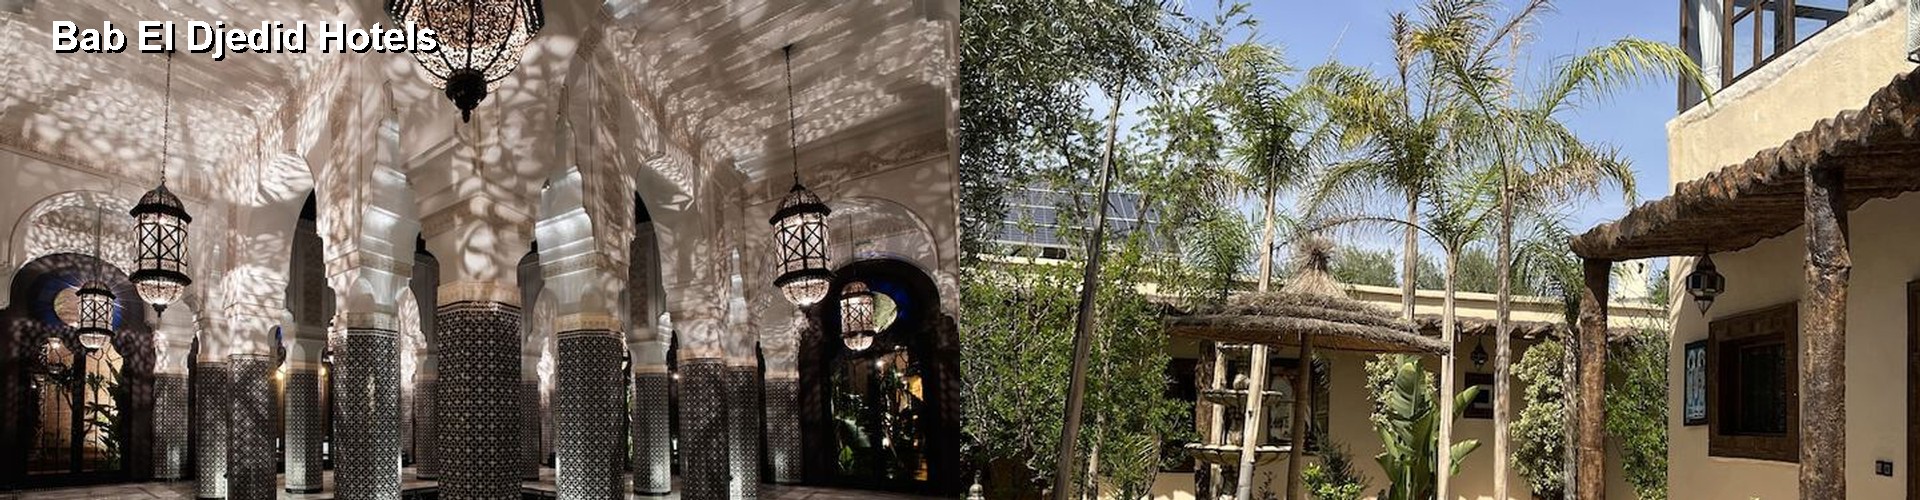 5 Best Hotels near Bab El Djedid